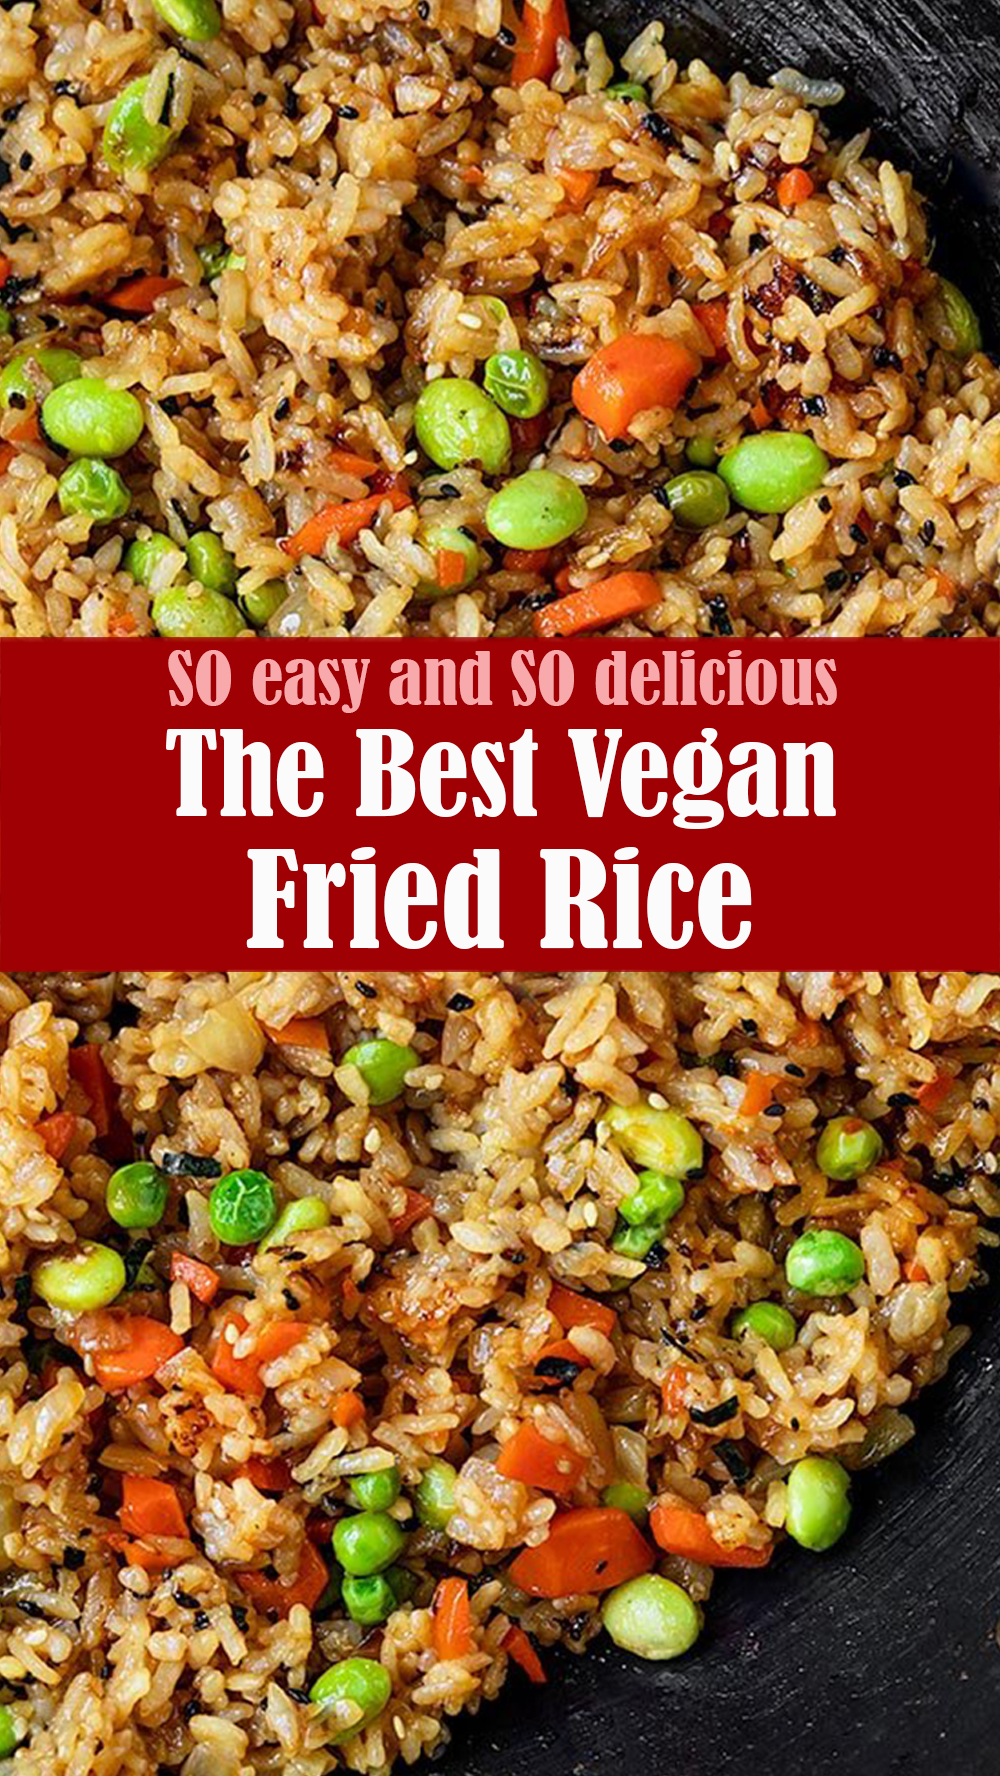 The Best Vegan Fried Rice Recipe